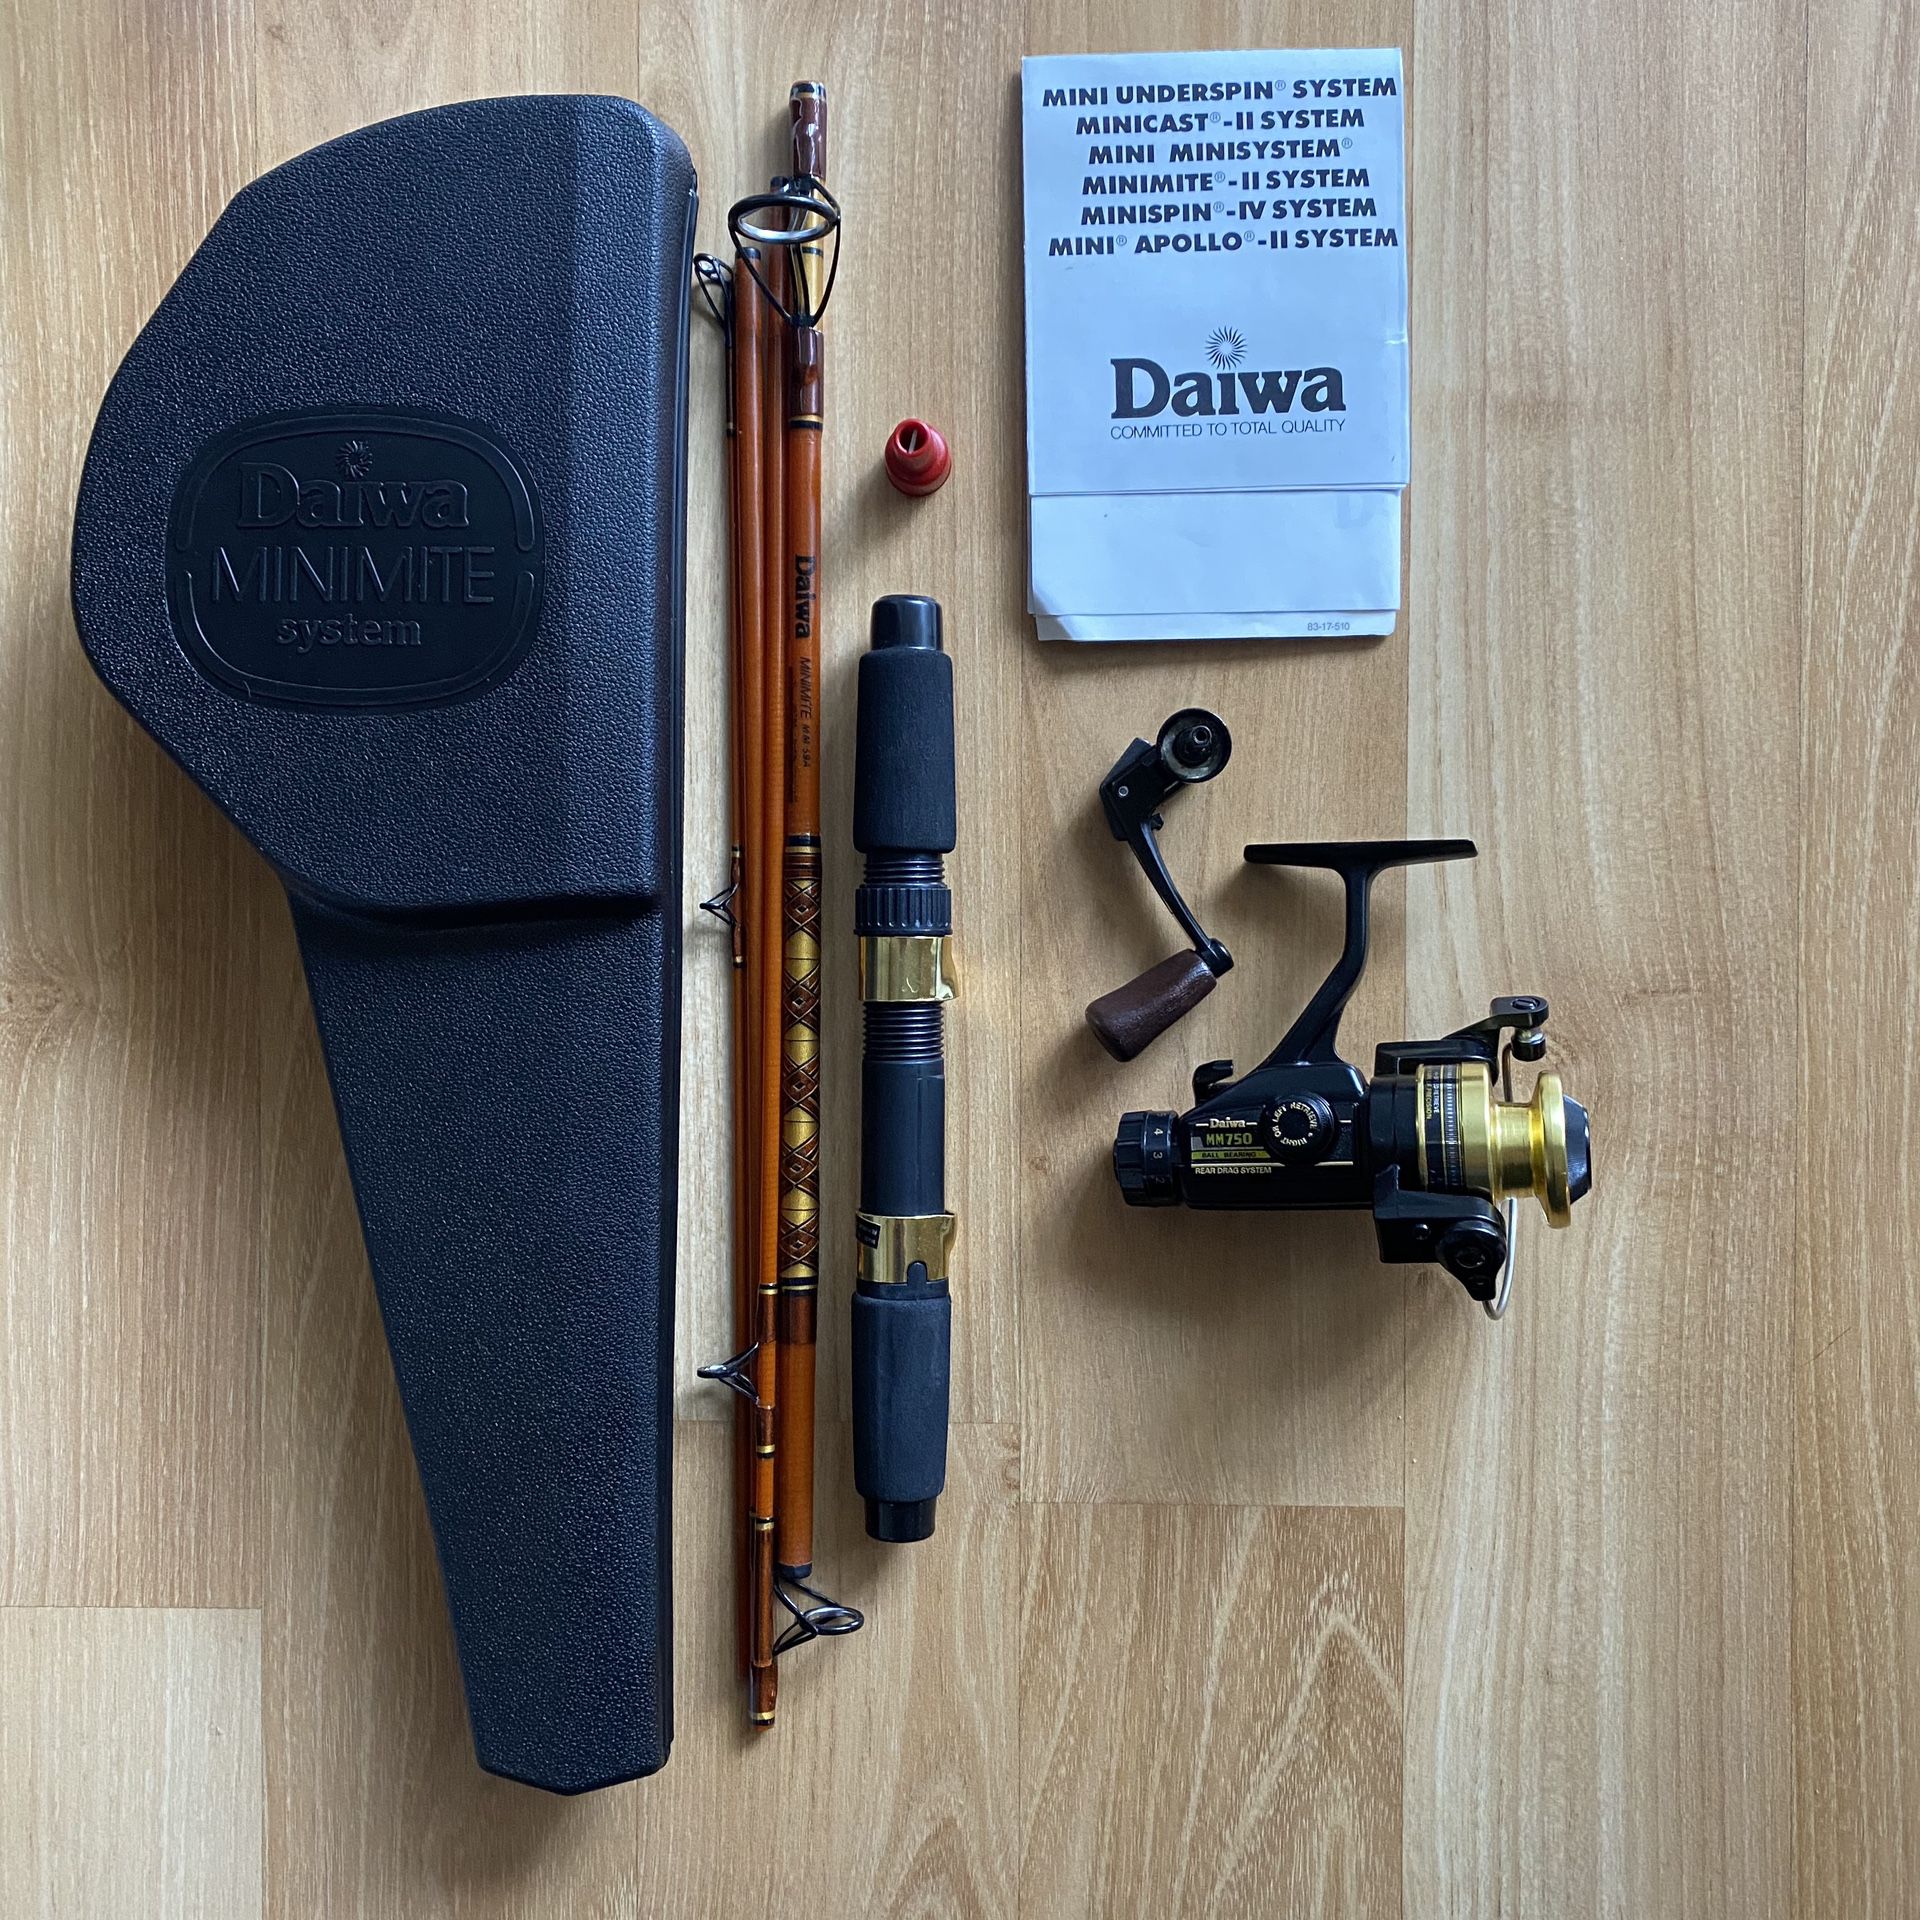 Vintage Daiwa MINIMITE SYSTEM MINI MITE Fishing Reel System MM750 Spinning Reel